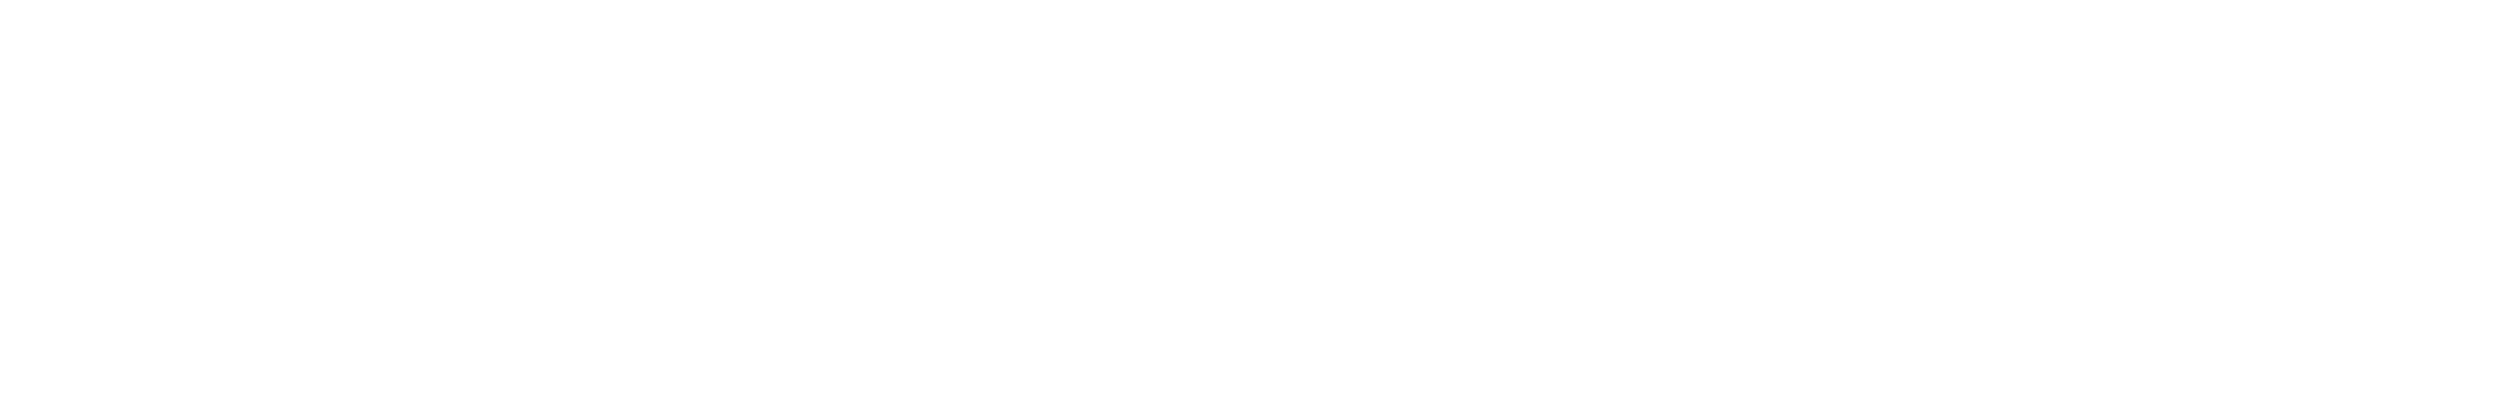 Duobuilt logos RGB White